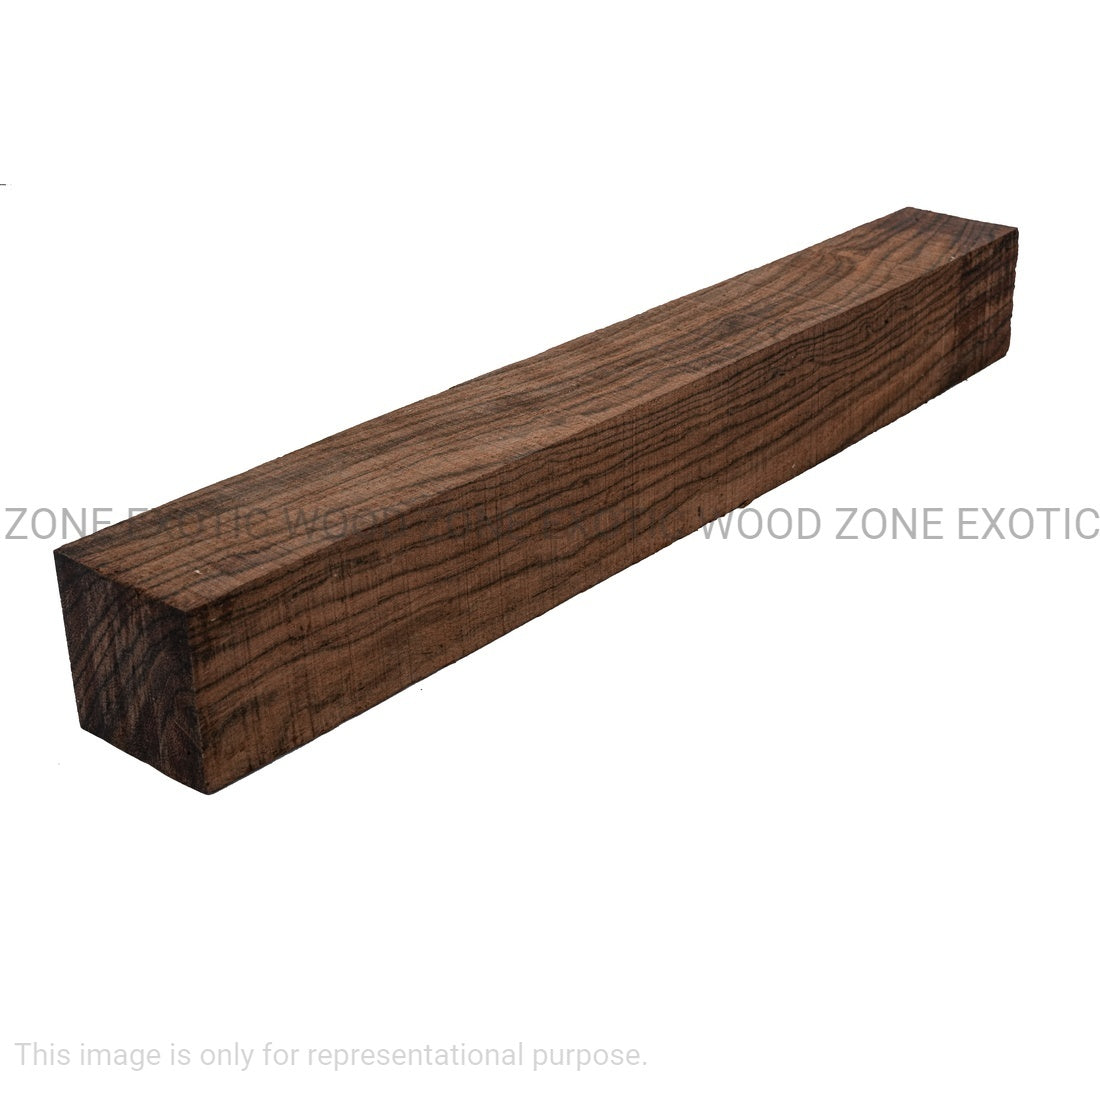 Pack of 6, Bocote Turning Blanks/Hobbywood Blanks 1” x 1” x 12” - Exotic Wood Zone - Buy online Across USA 